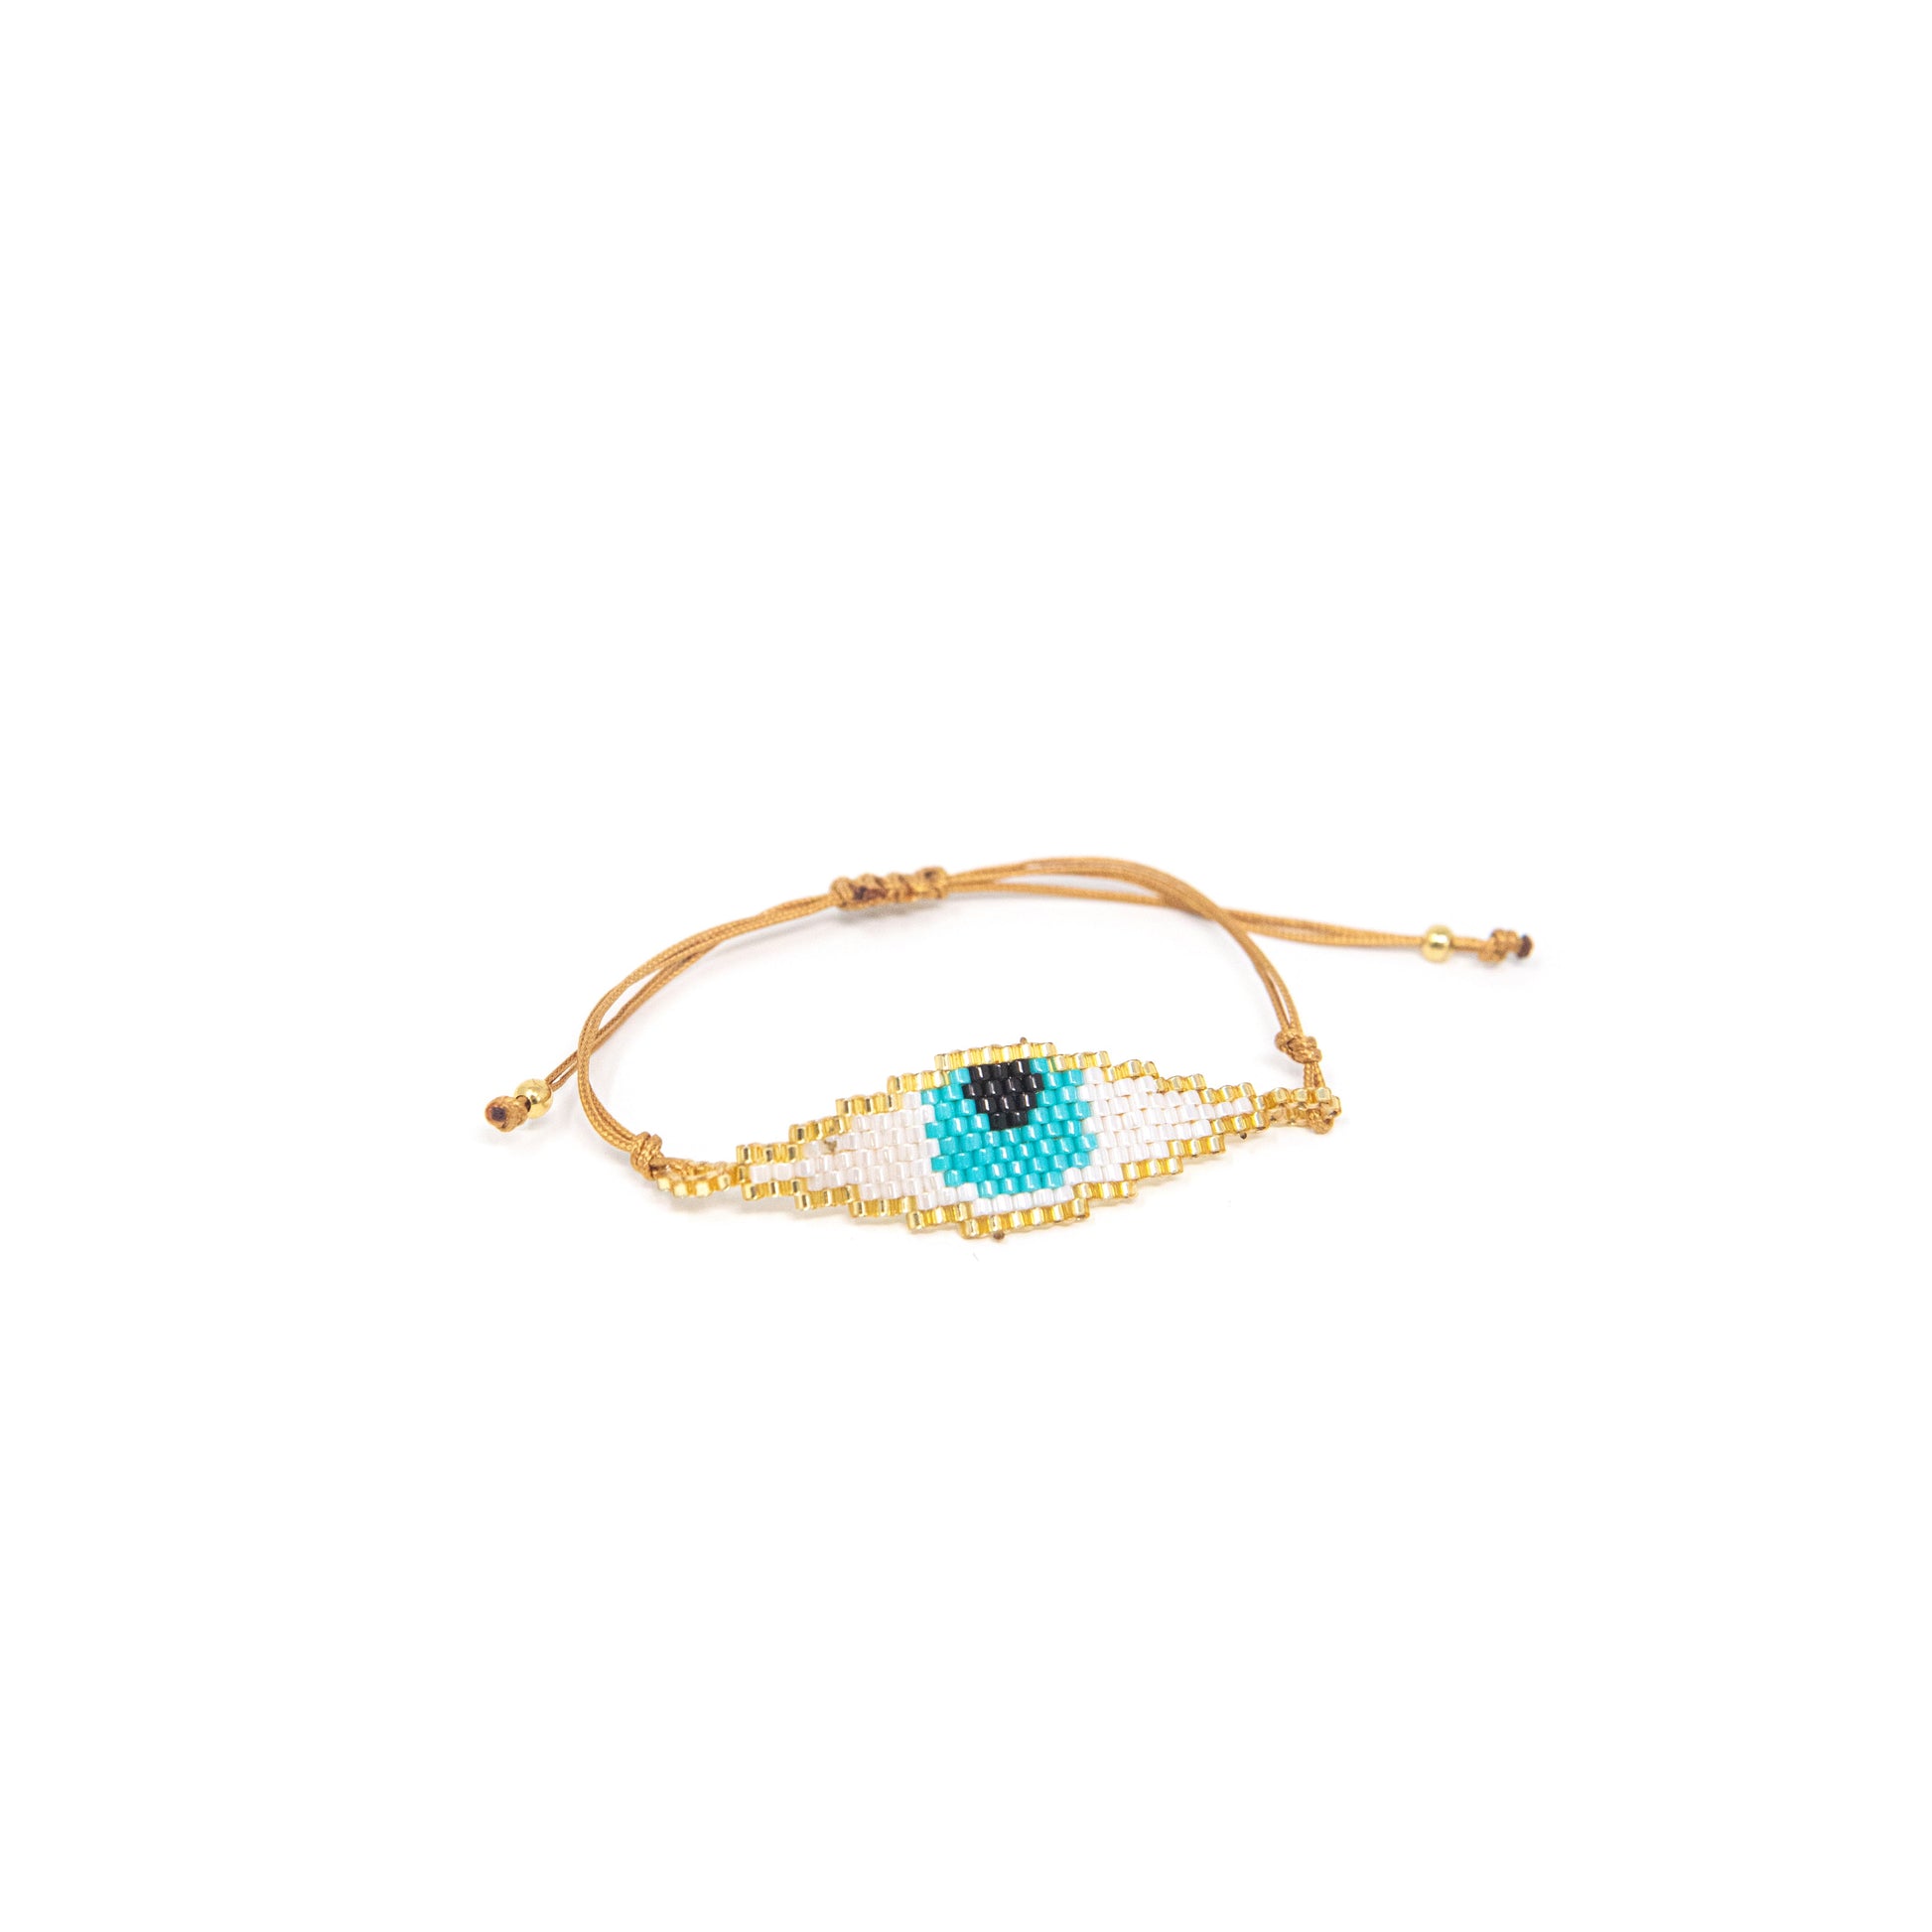 Beaded Evil Eye Adjustable Cord Bracelet JEWELRY The Sis Kiss Turquoise Eye on White Background